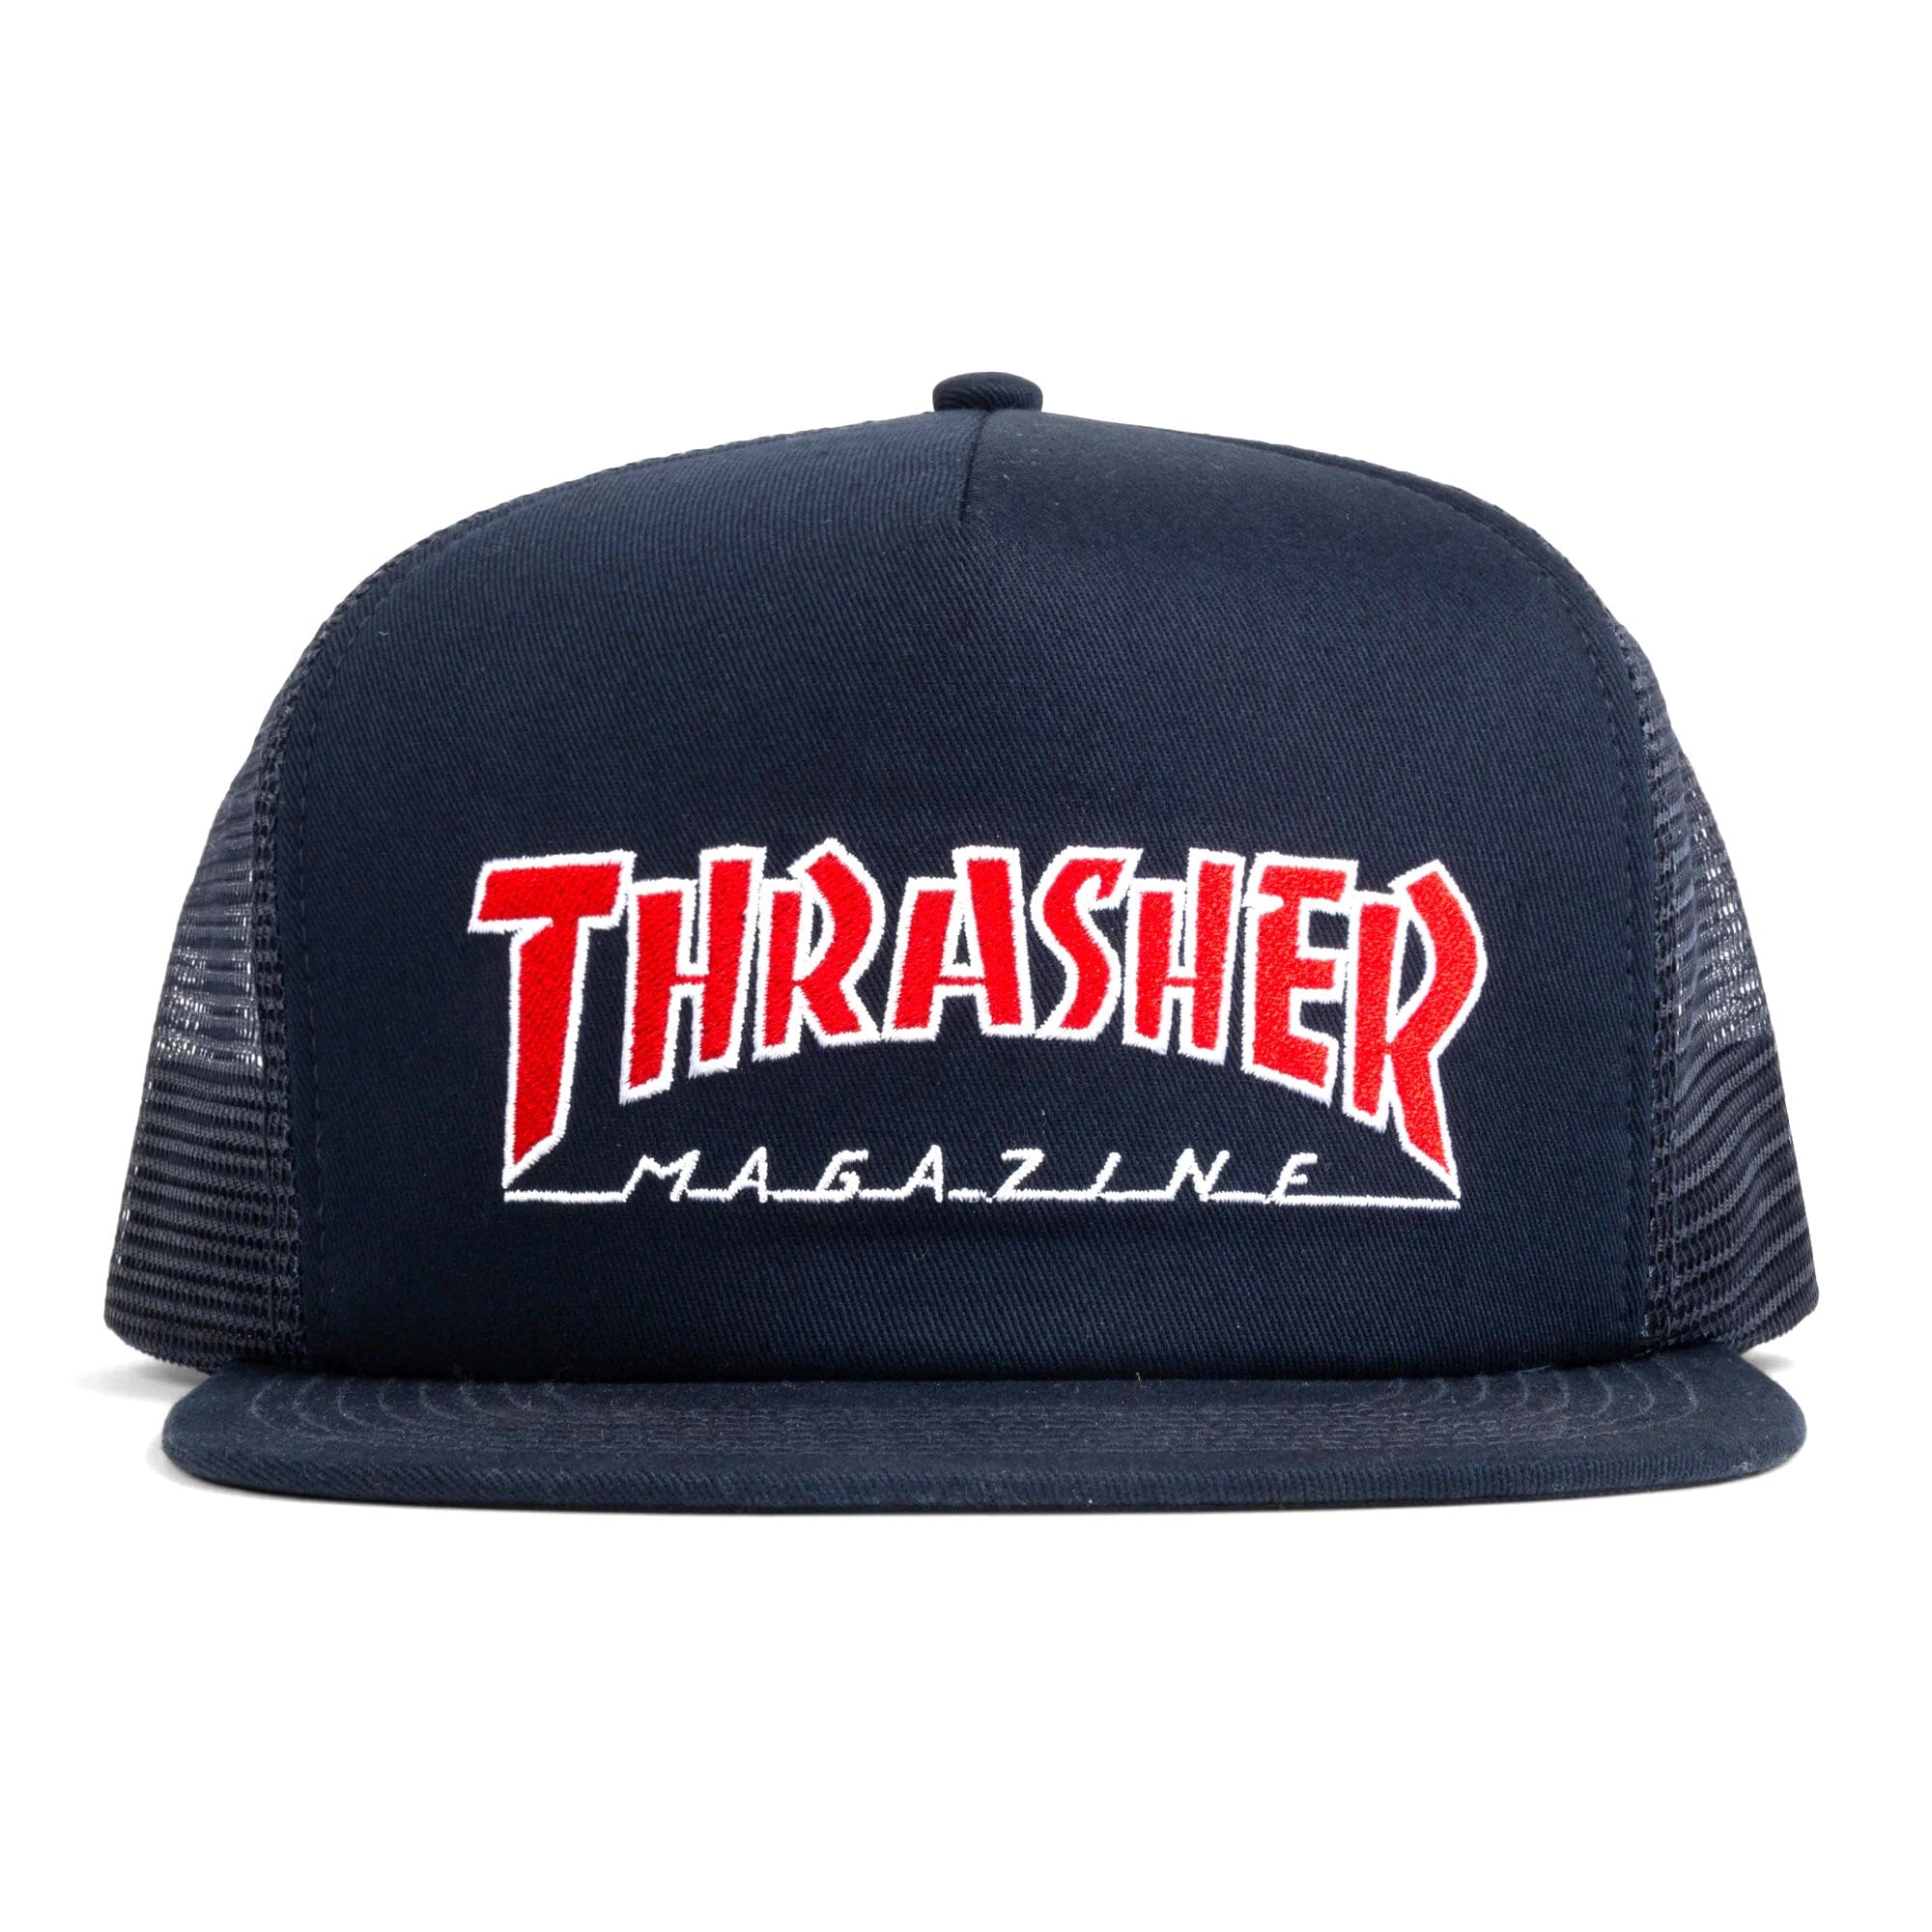 Thrasher Outlined Trucker Hat Navy hats Thrasher Magazine 